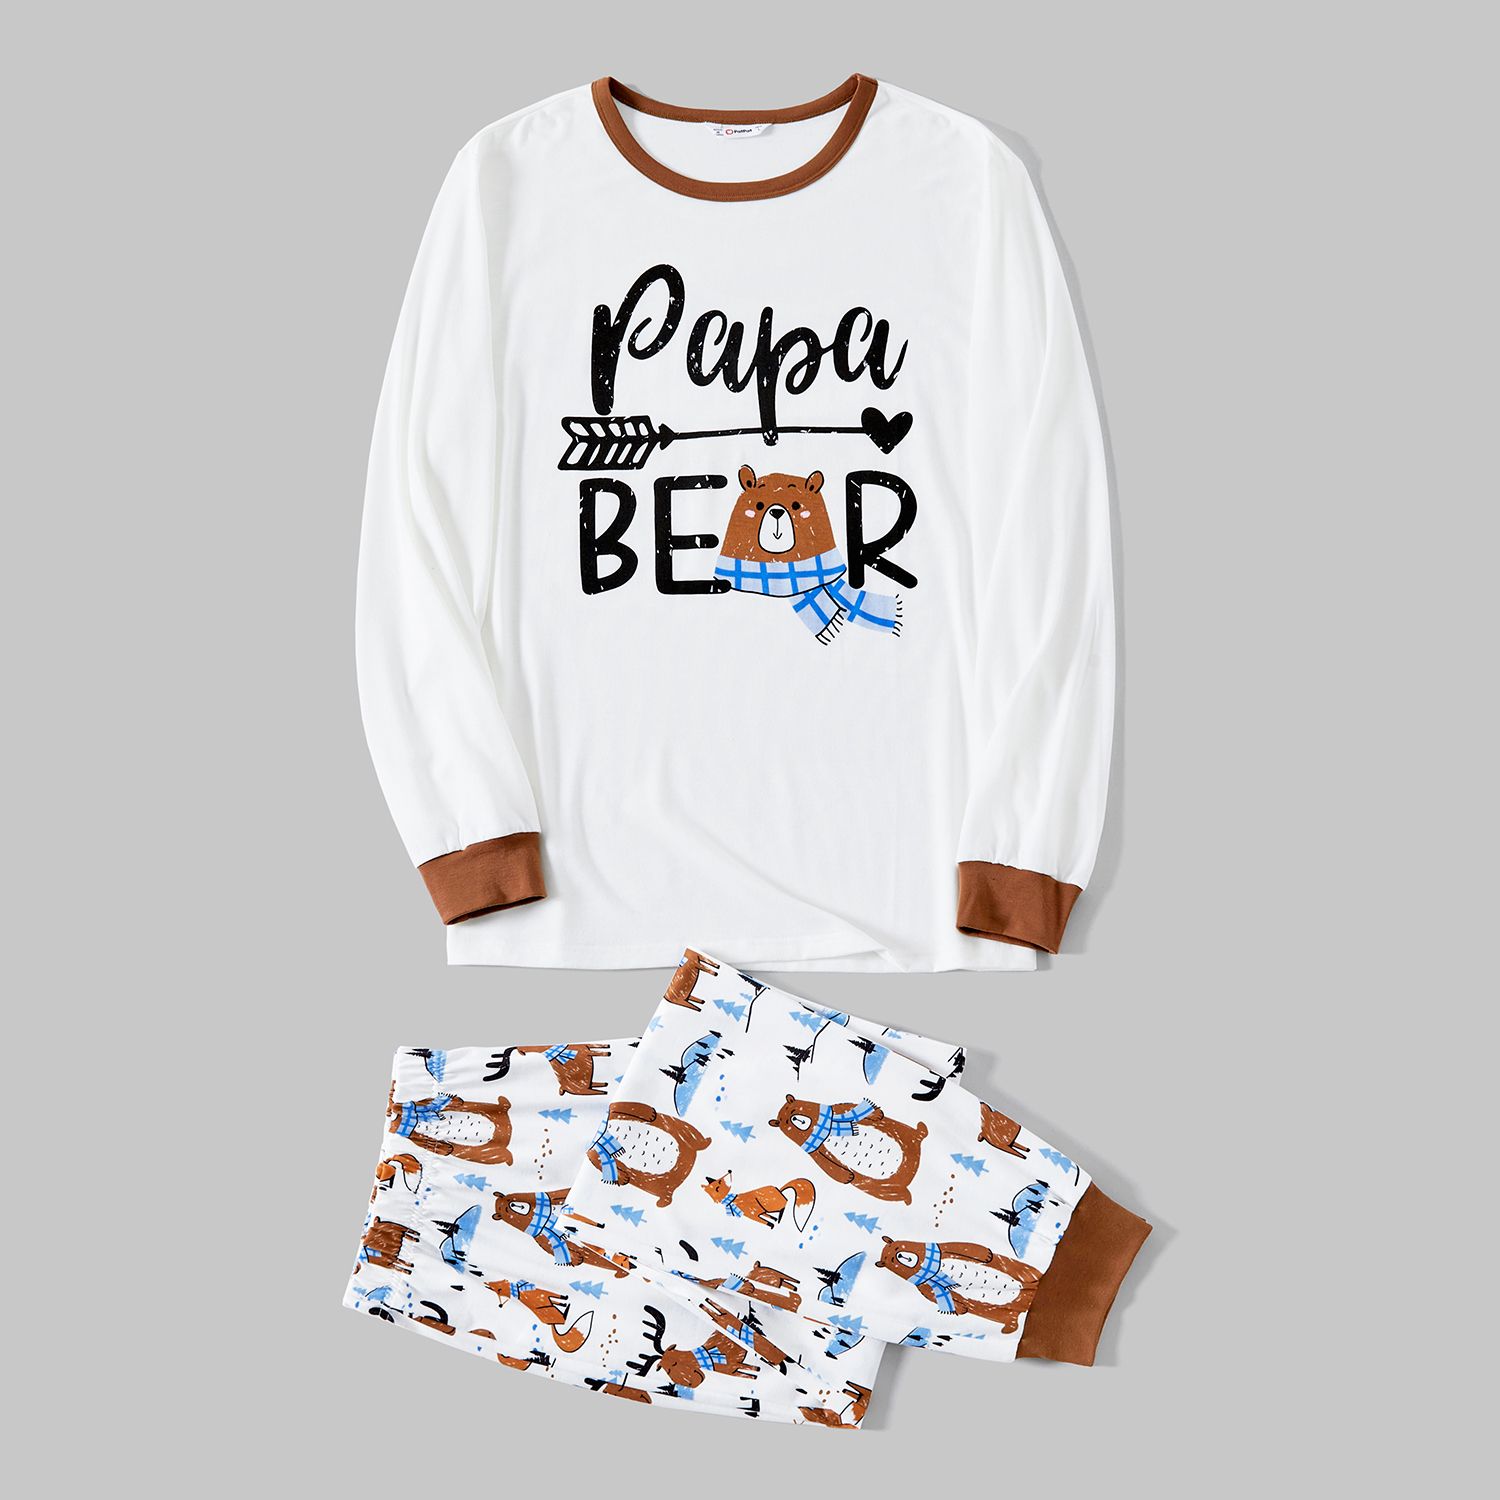 PatPat Plaid Bear Family Matching Pajamas Sets(Flame Resistant